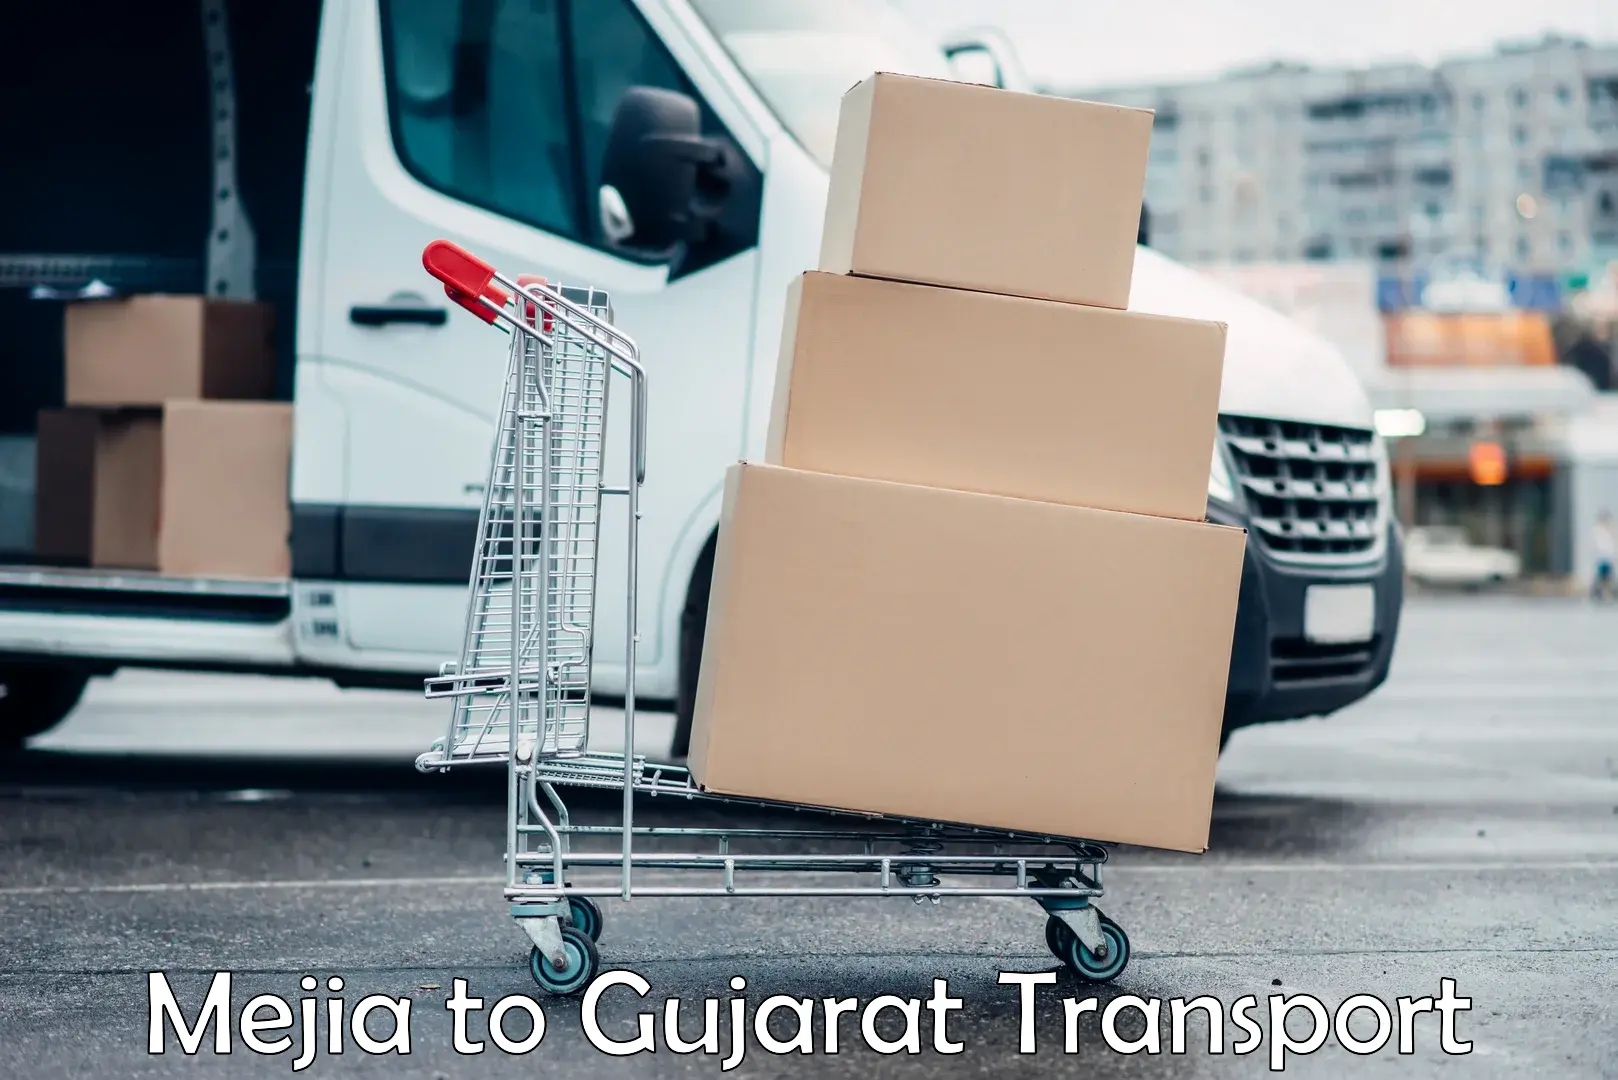 Furniture transport service Mejia to Matar